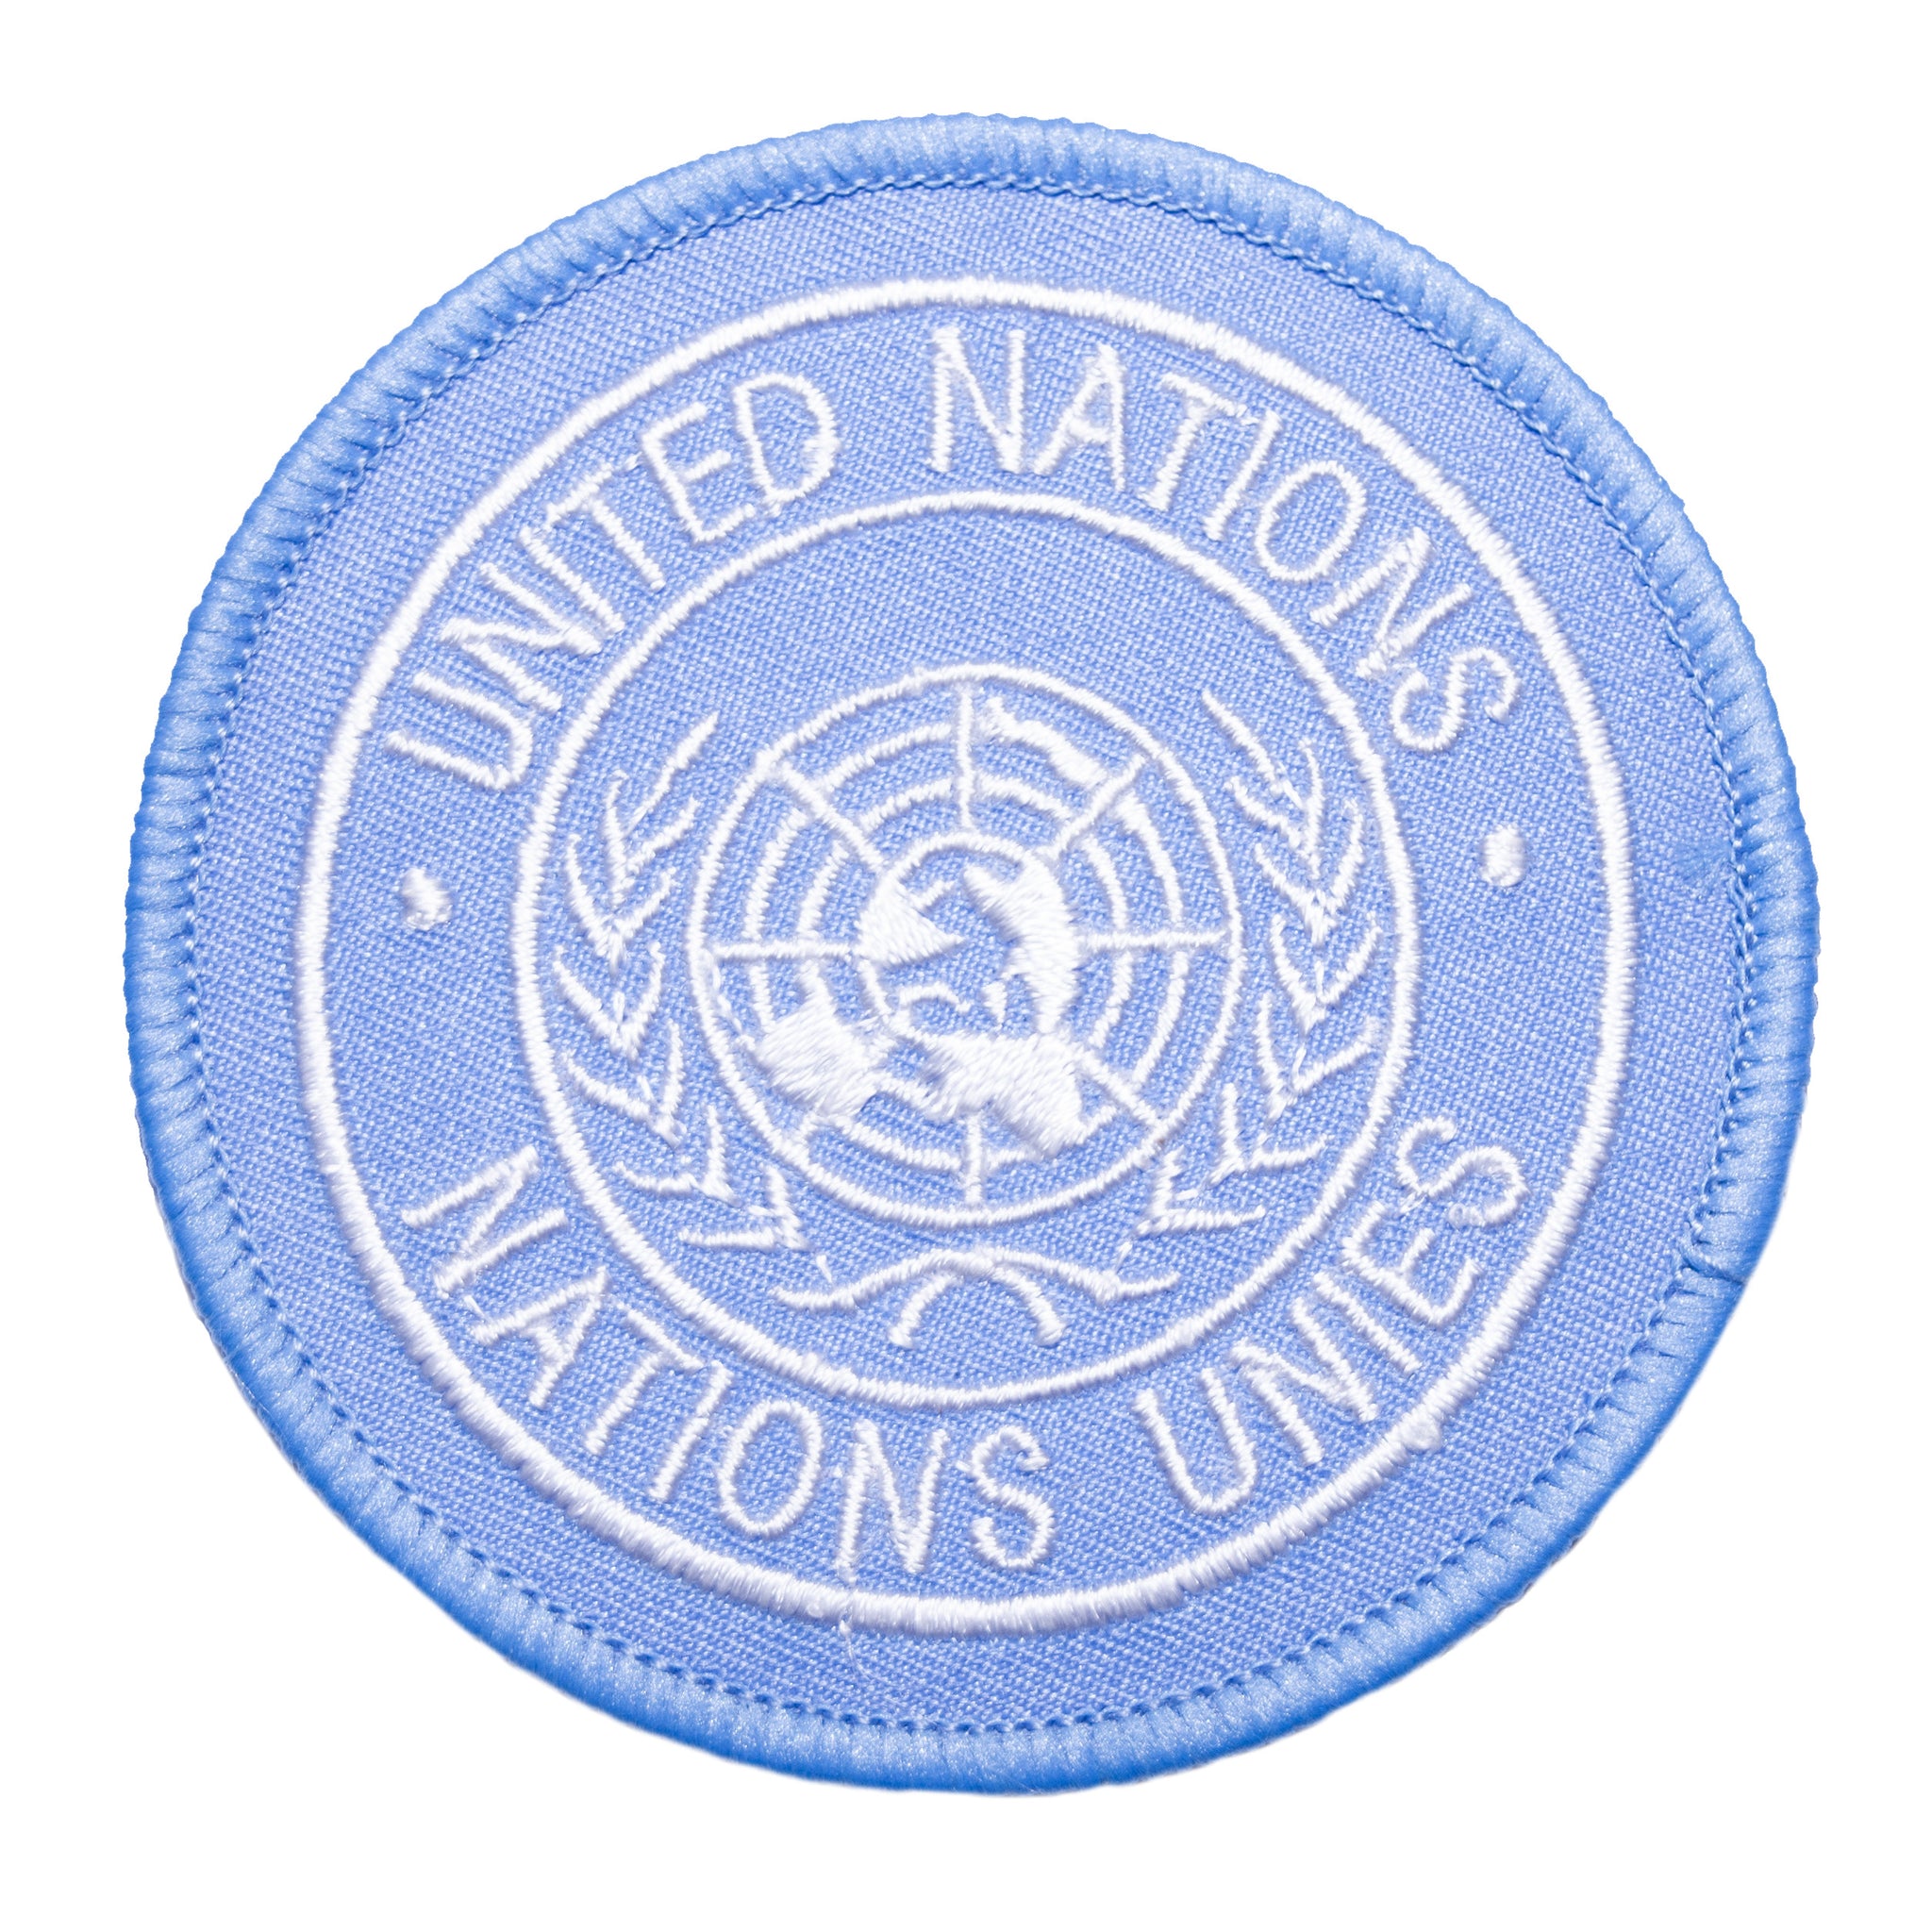 International (UN) United Nations Unies Shoulder Badge